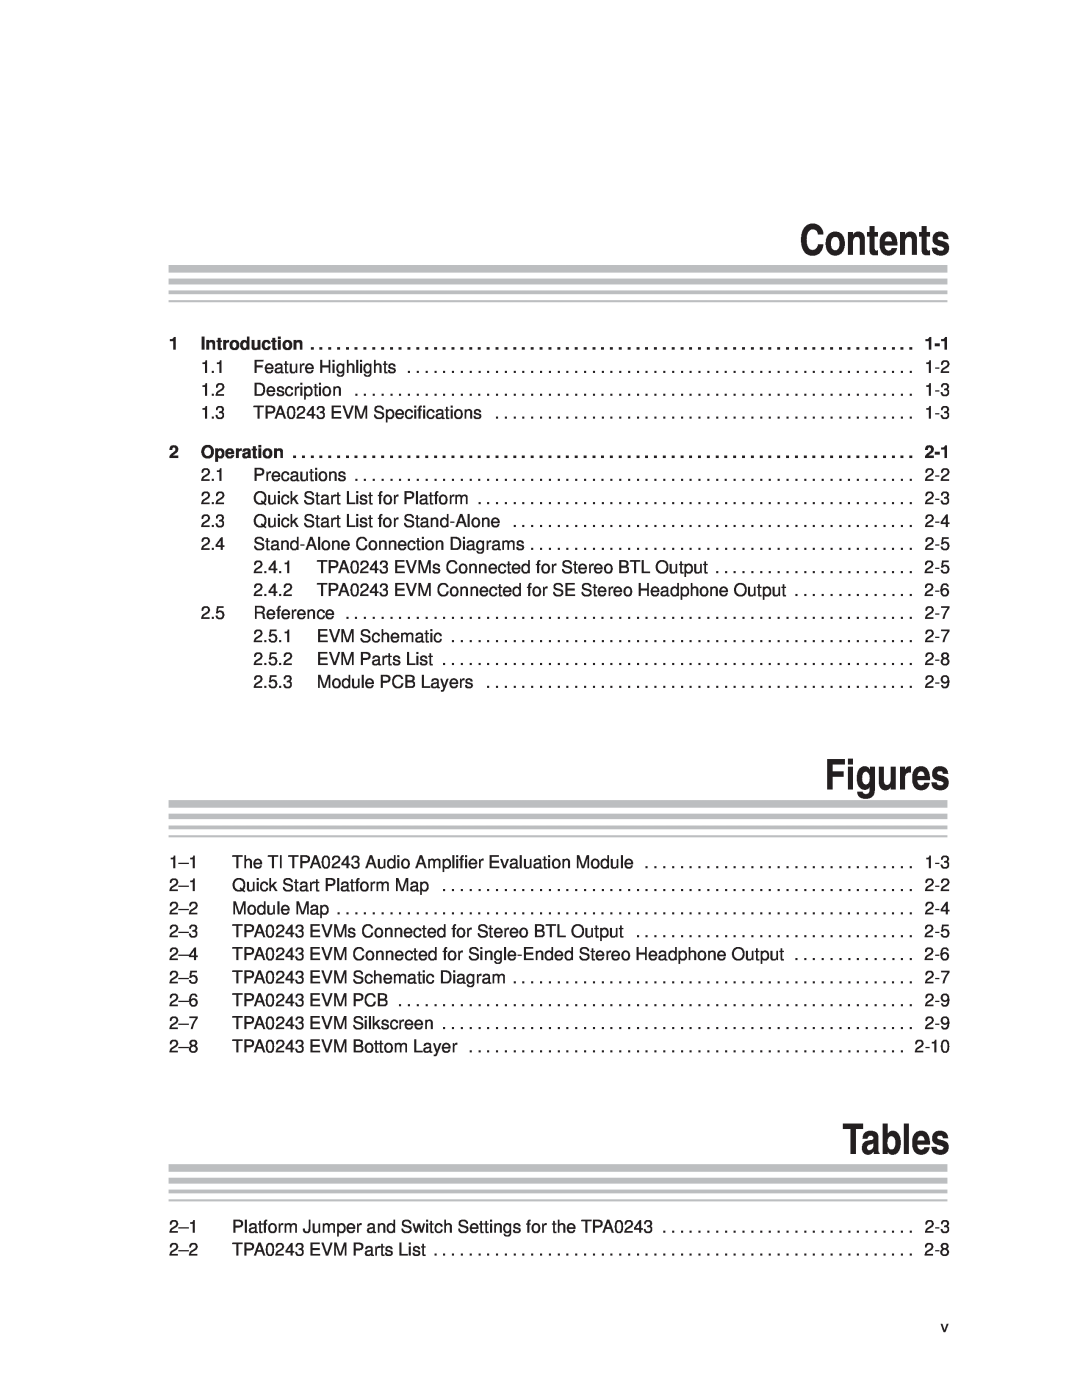 Texas Instruments TPA0243 manual Contents, Figures, Tables 